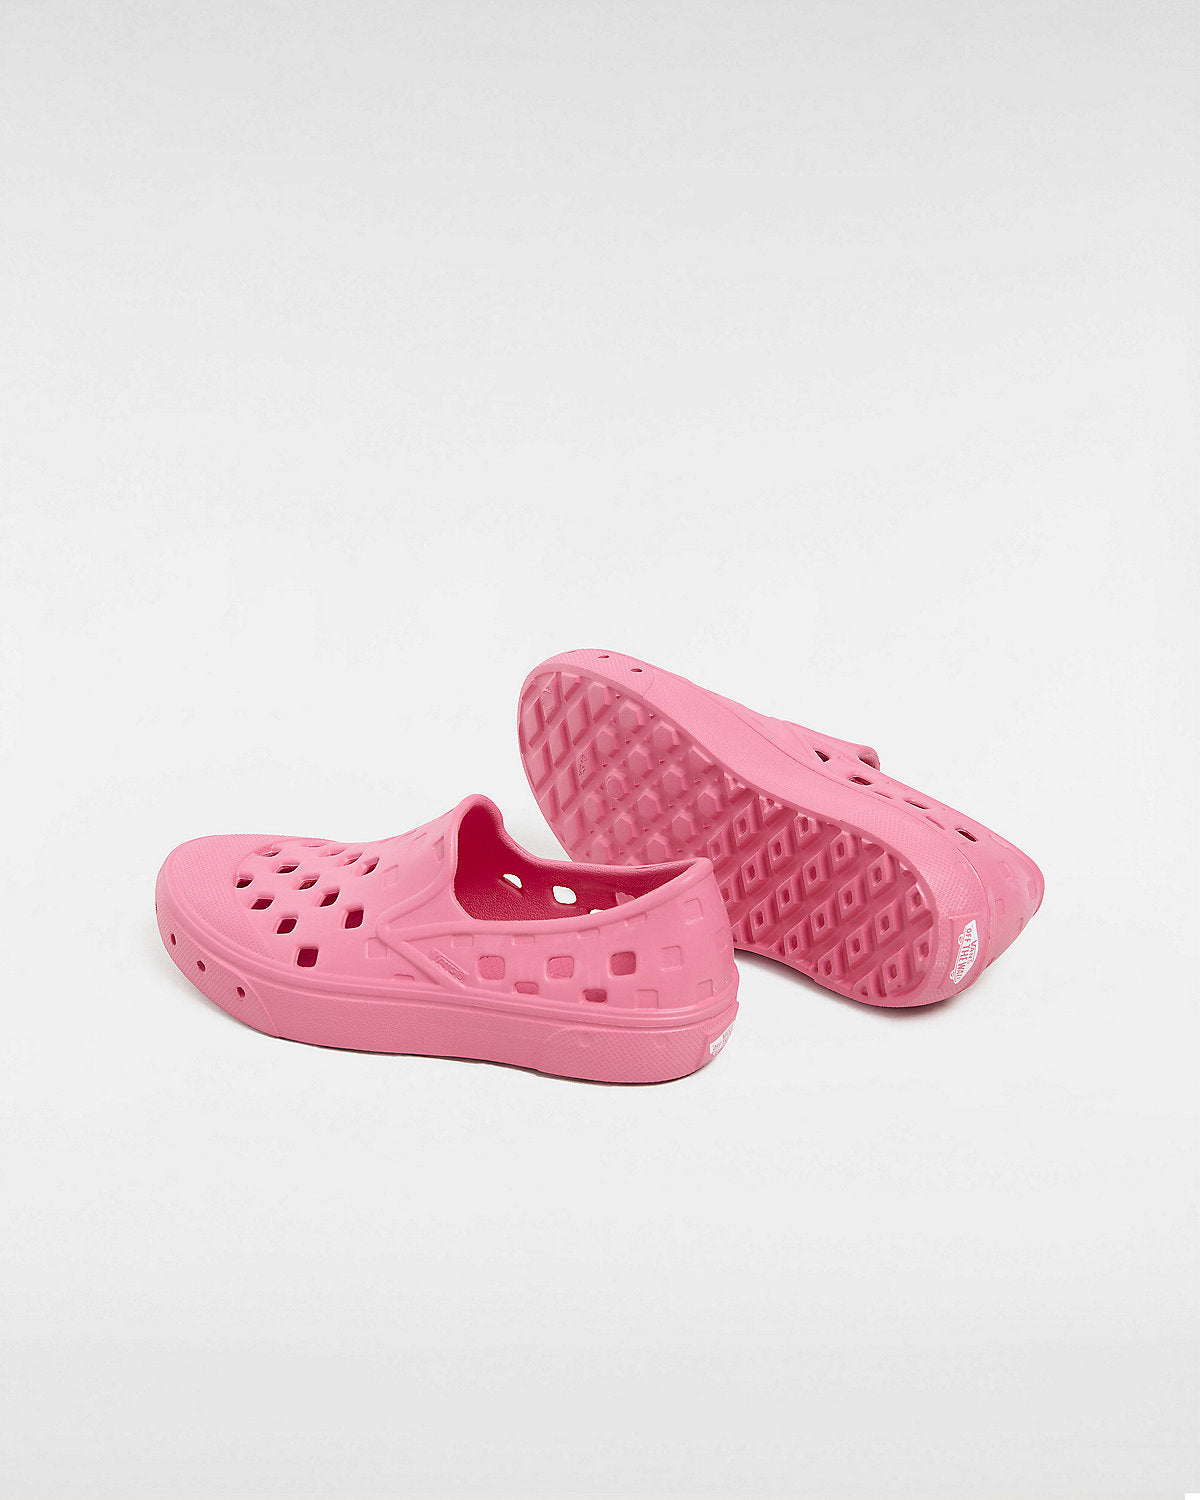 VANS Kids TRK Slip On Shoes - Honeysuckle